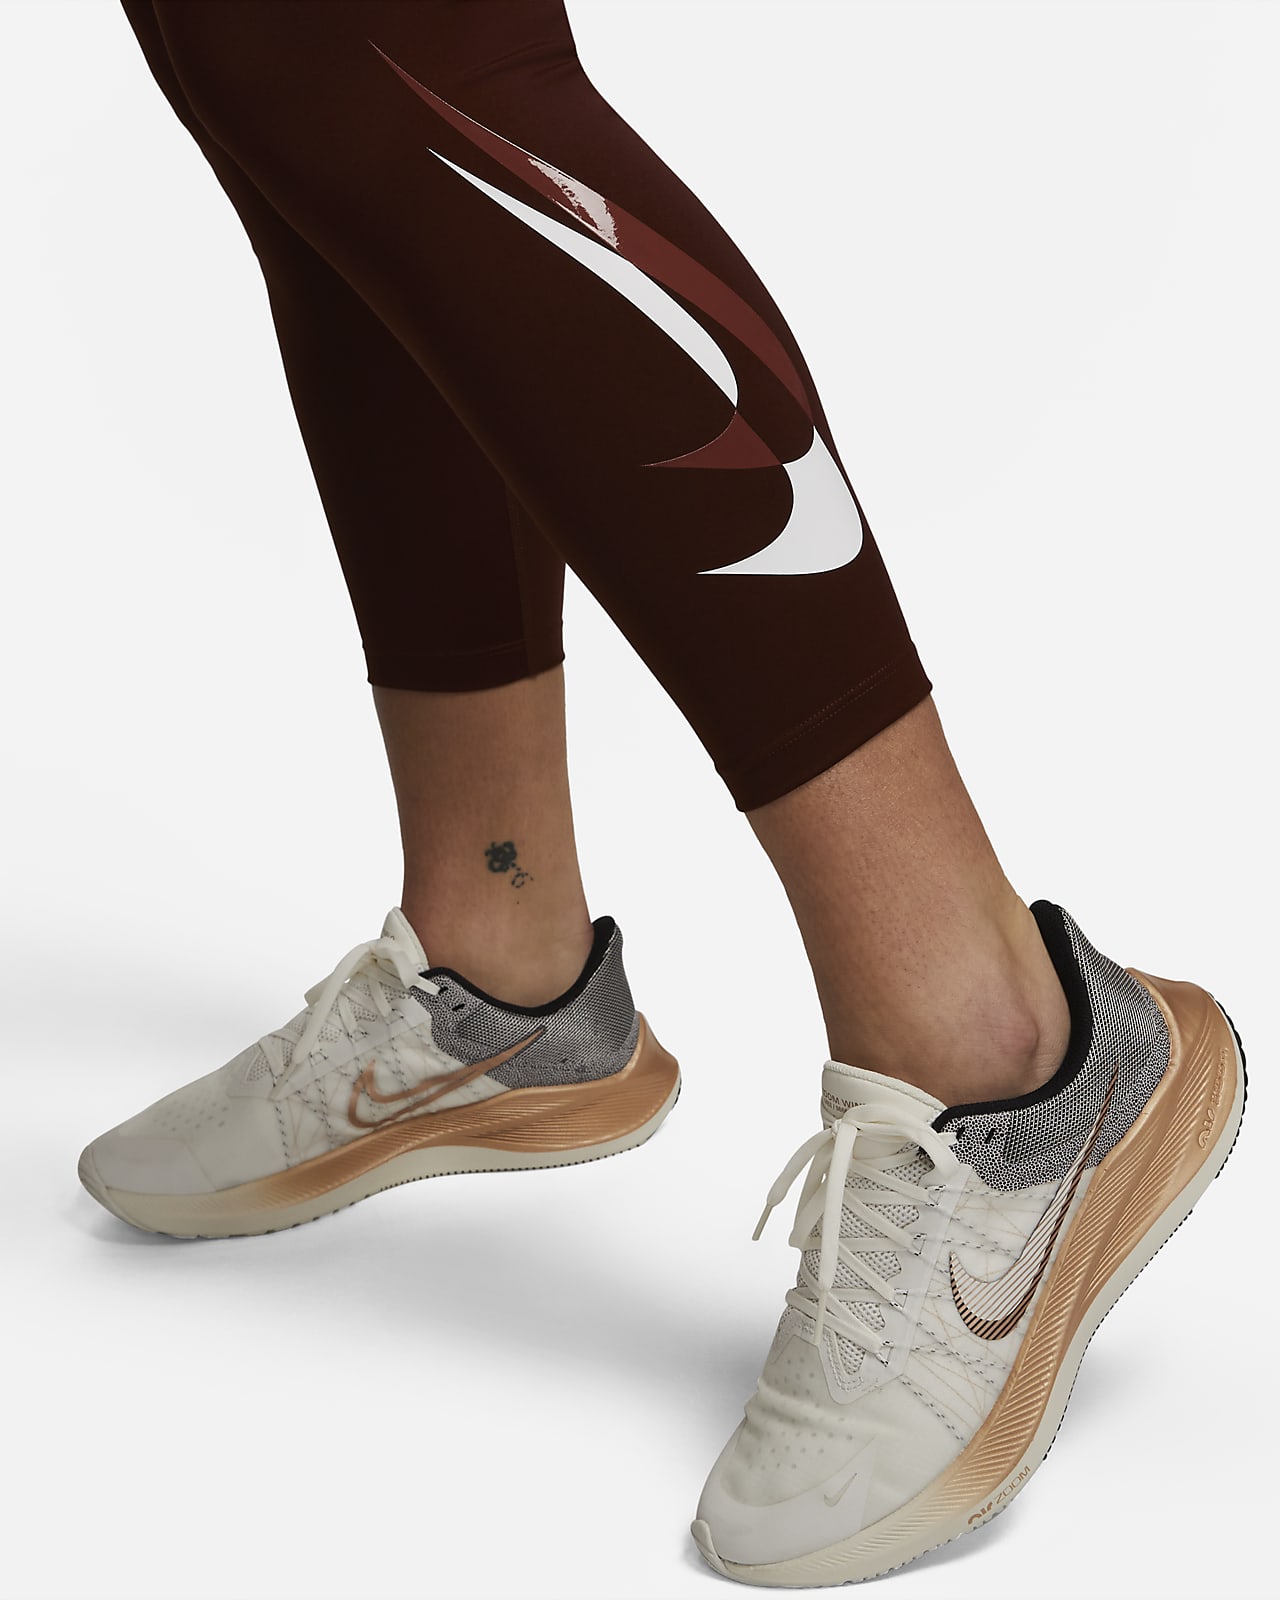 Nike Air 7/8 Women's Monogram Logo Tights Running Training DRI-FIT